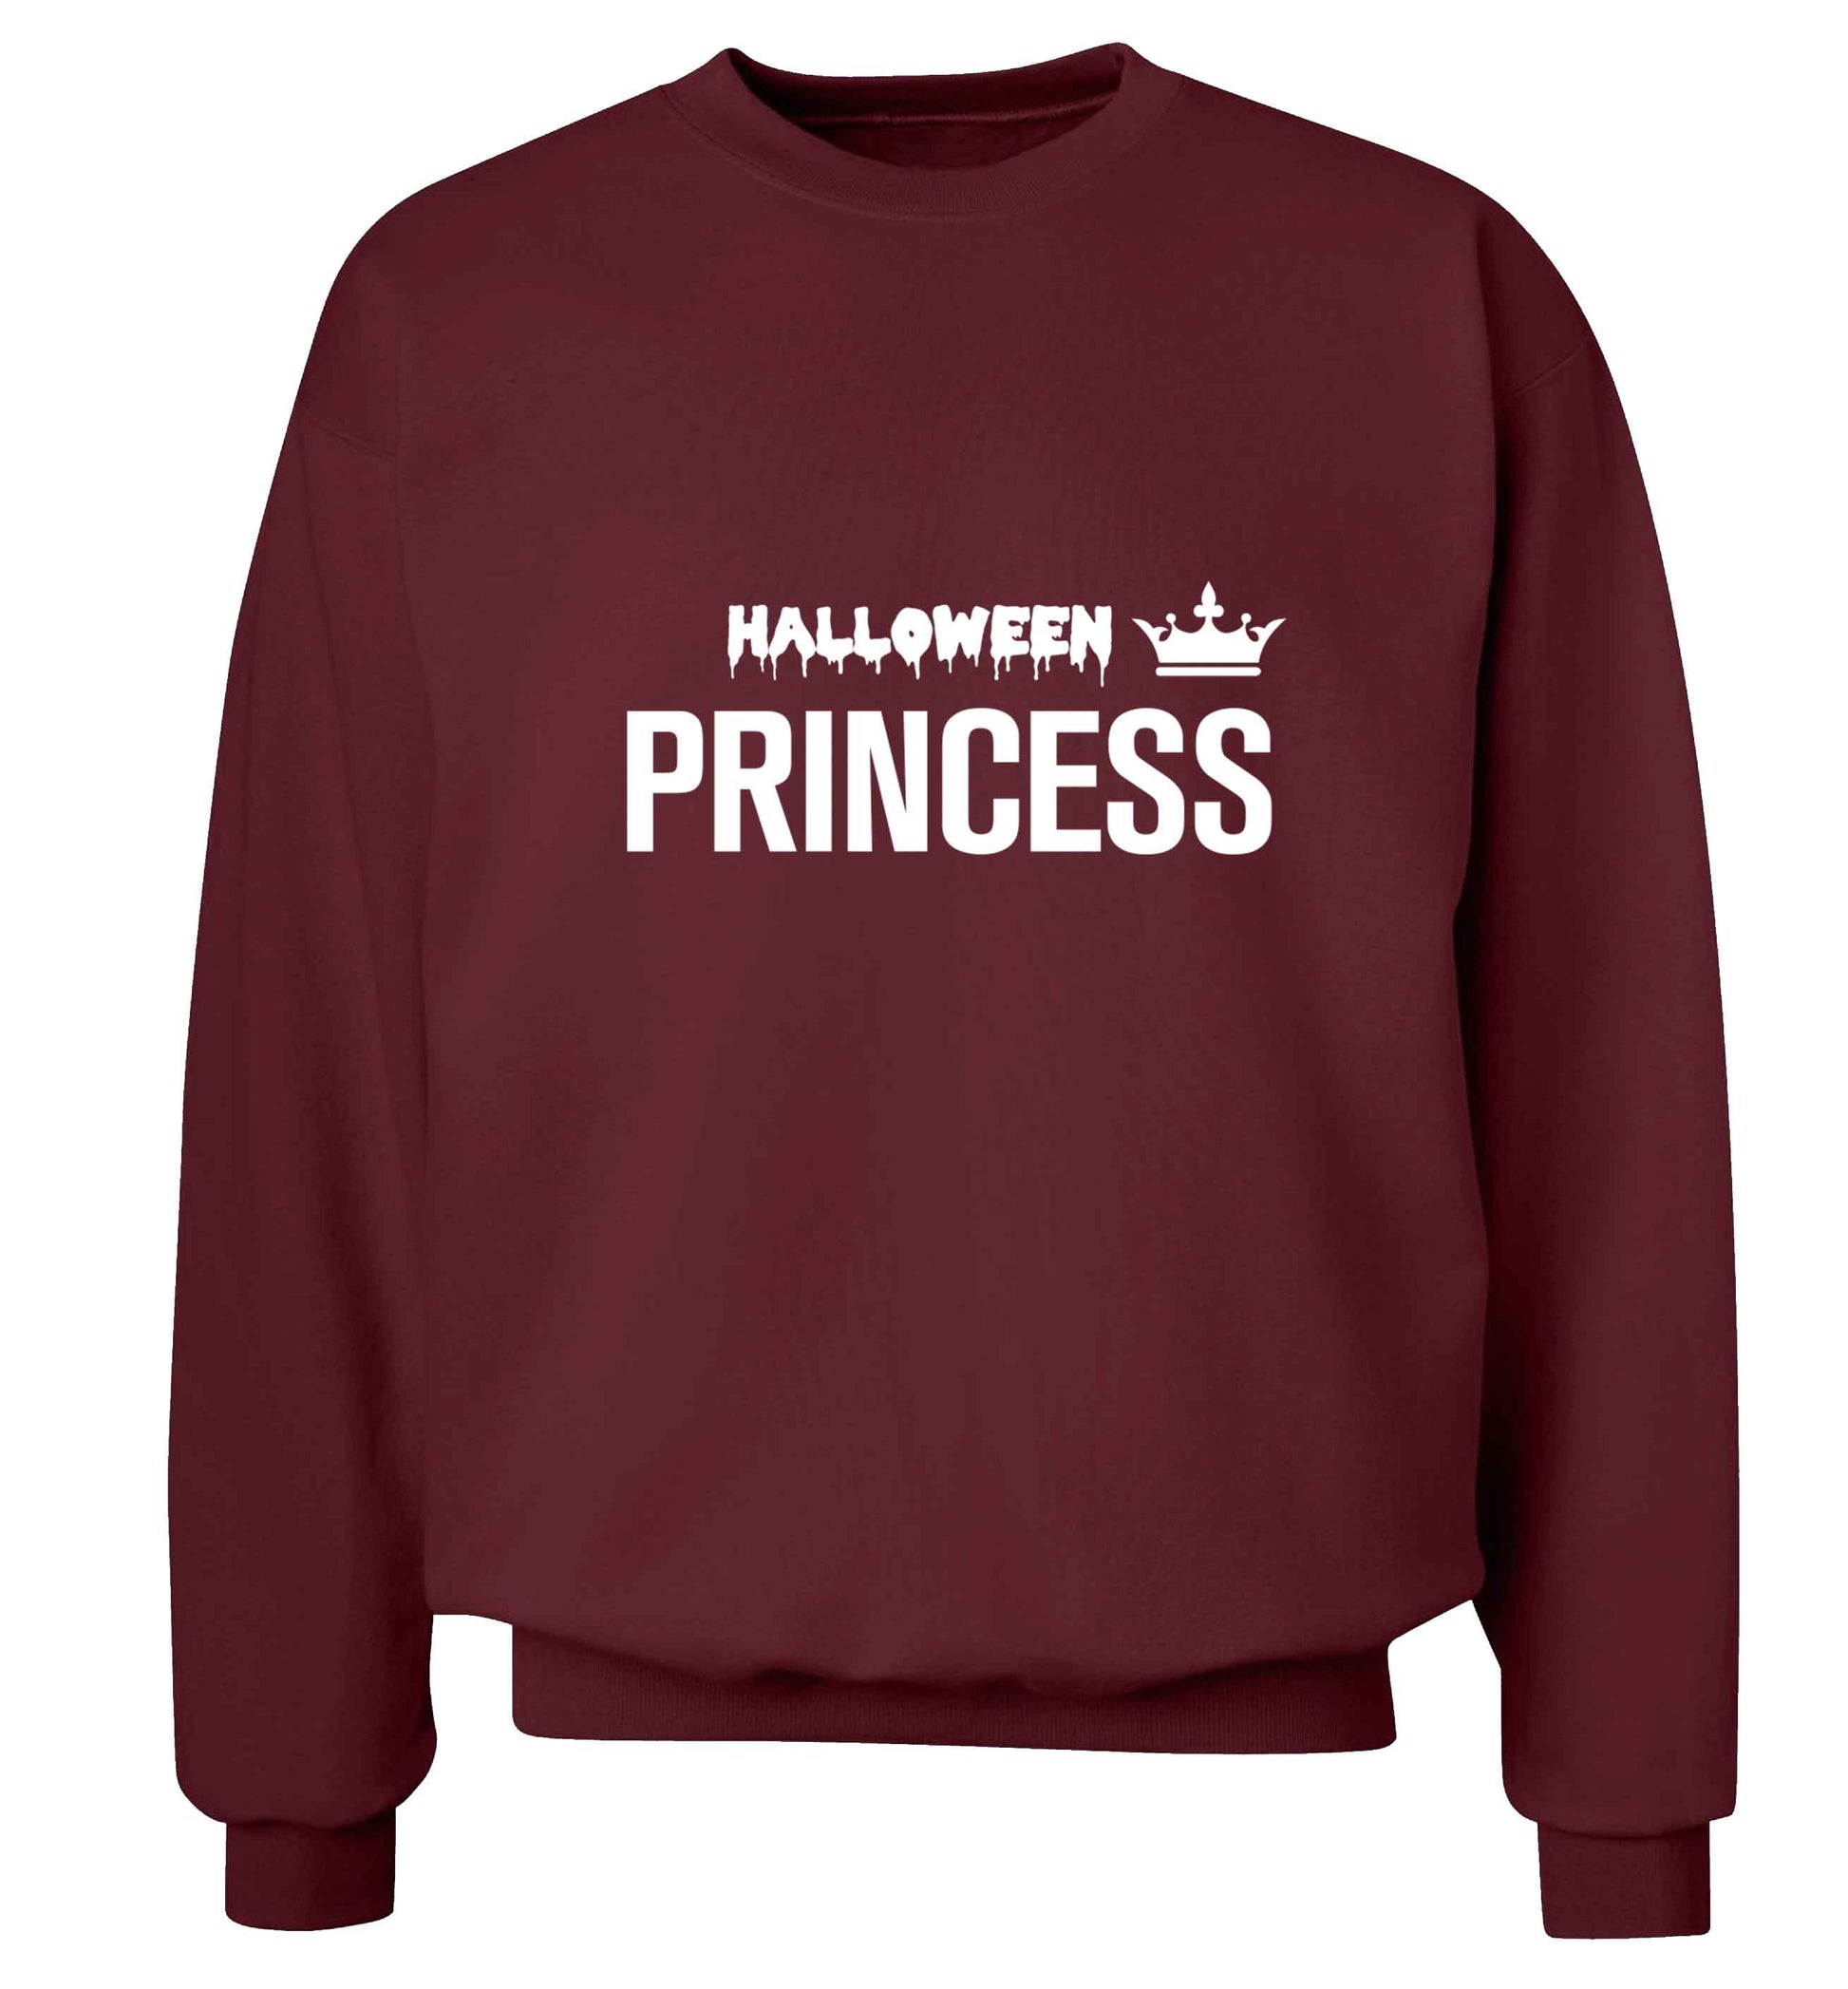 Halloween princess adult's unisex maroon sweater 2XL